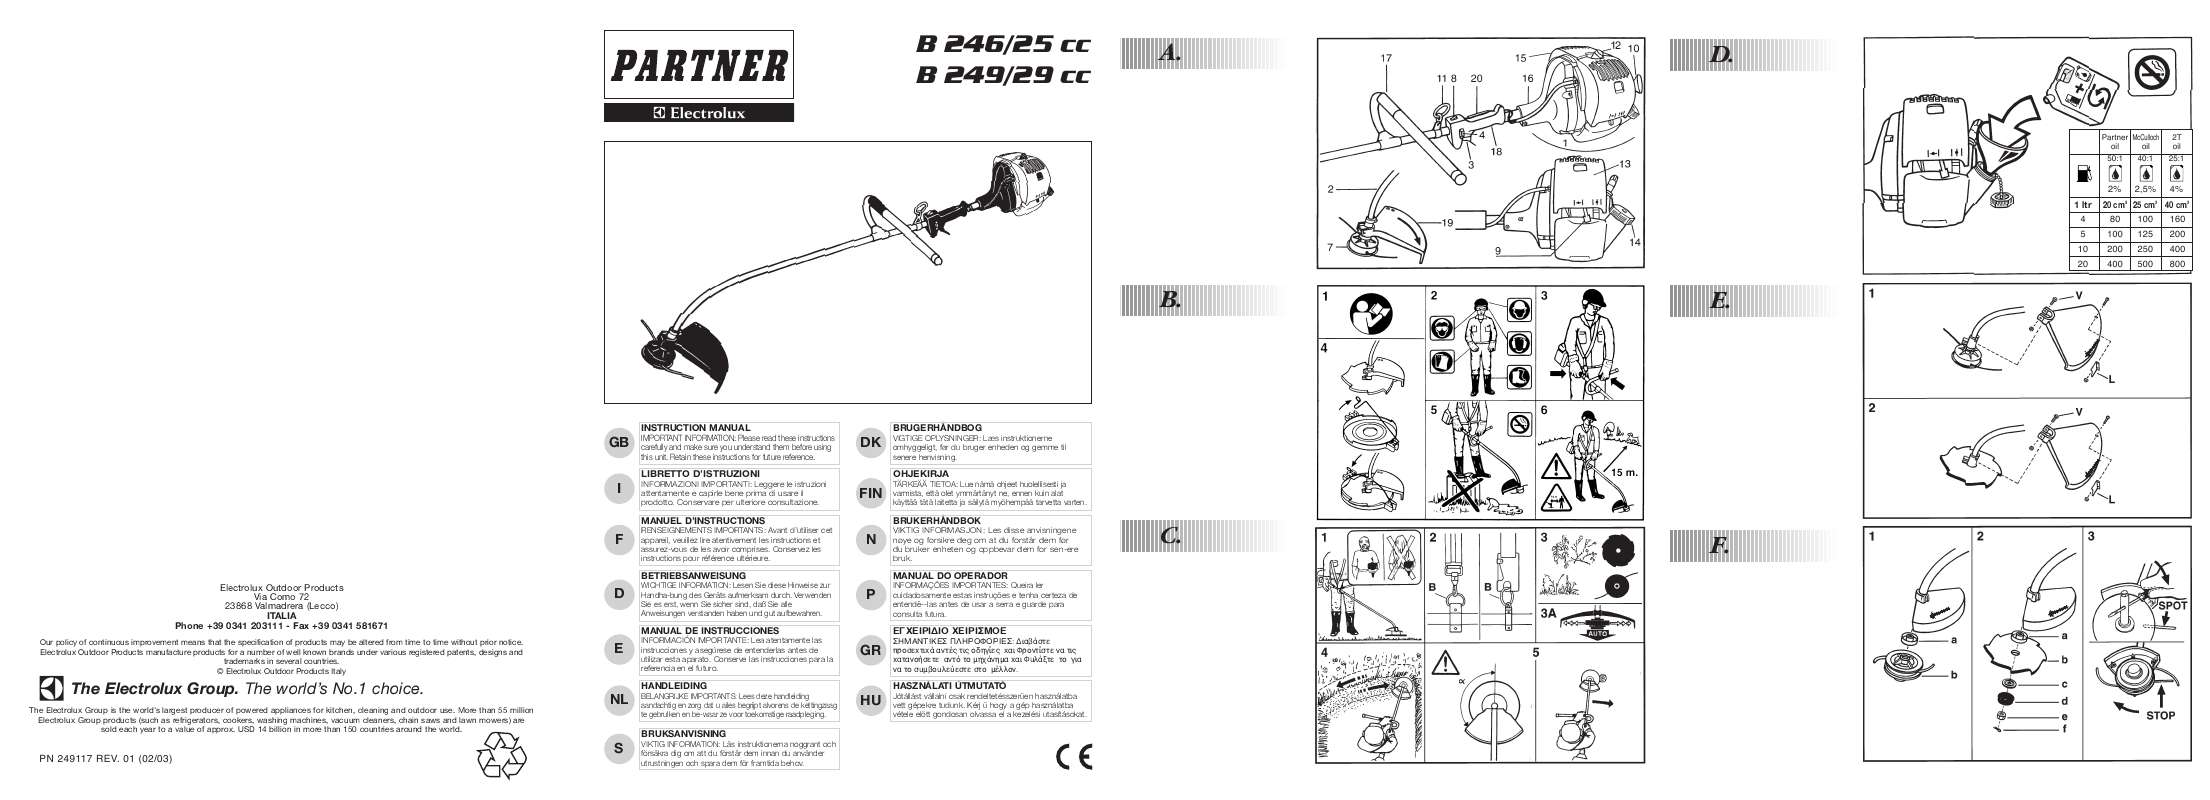 Guide utilisation PARTNER B 246 TRIMMER  de la marque PARTNER